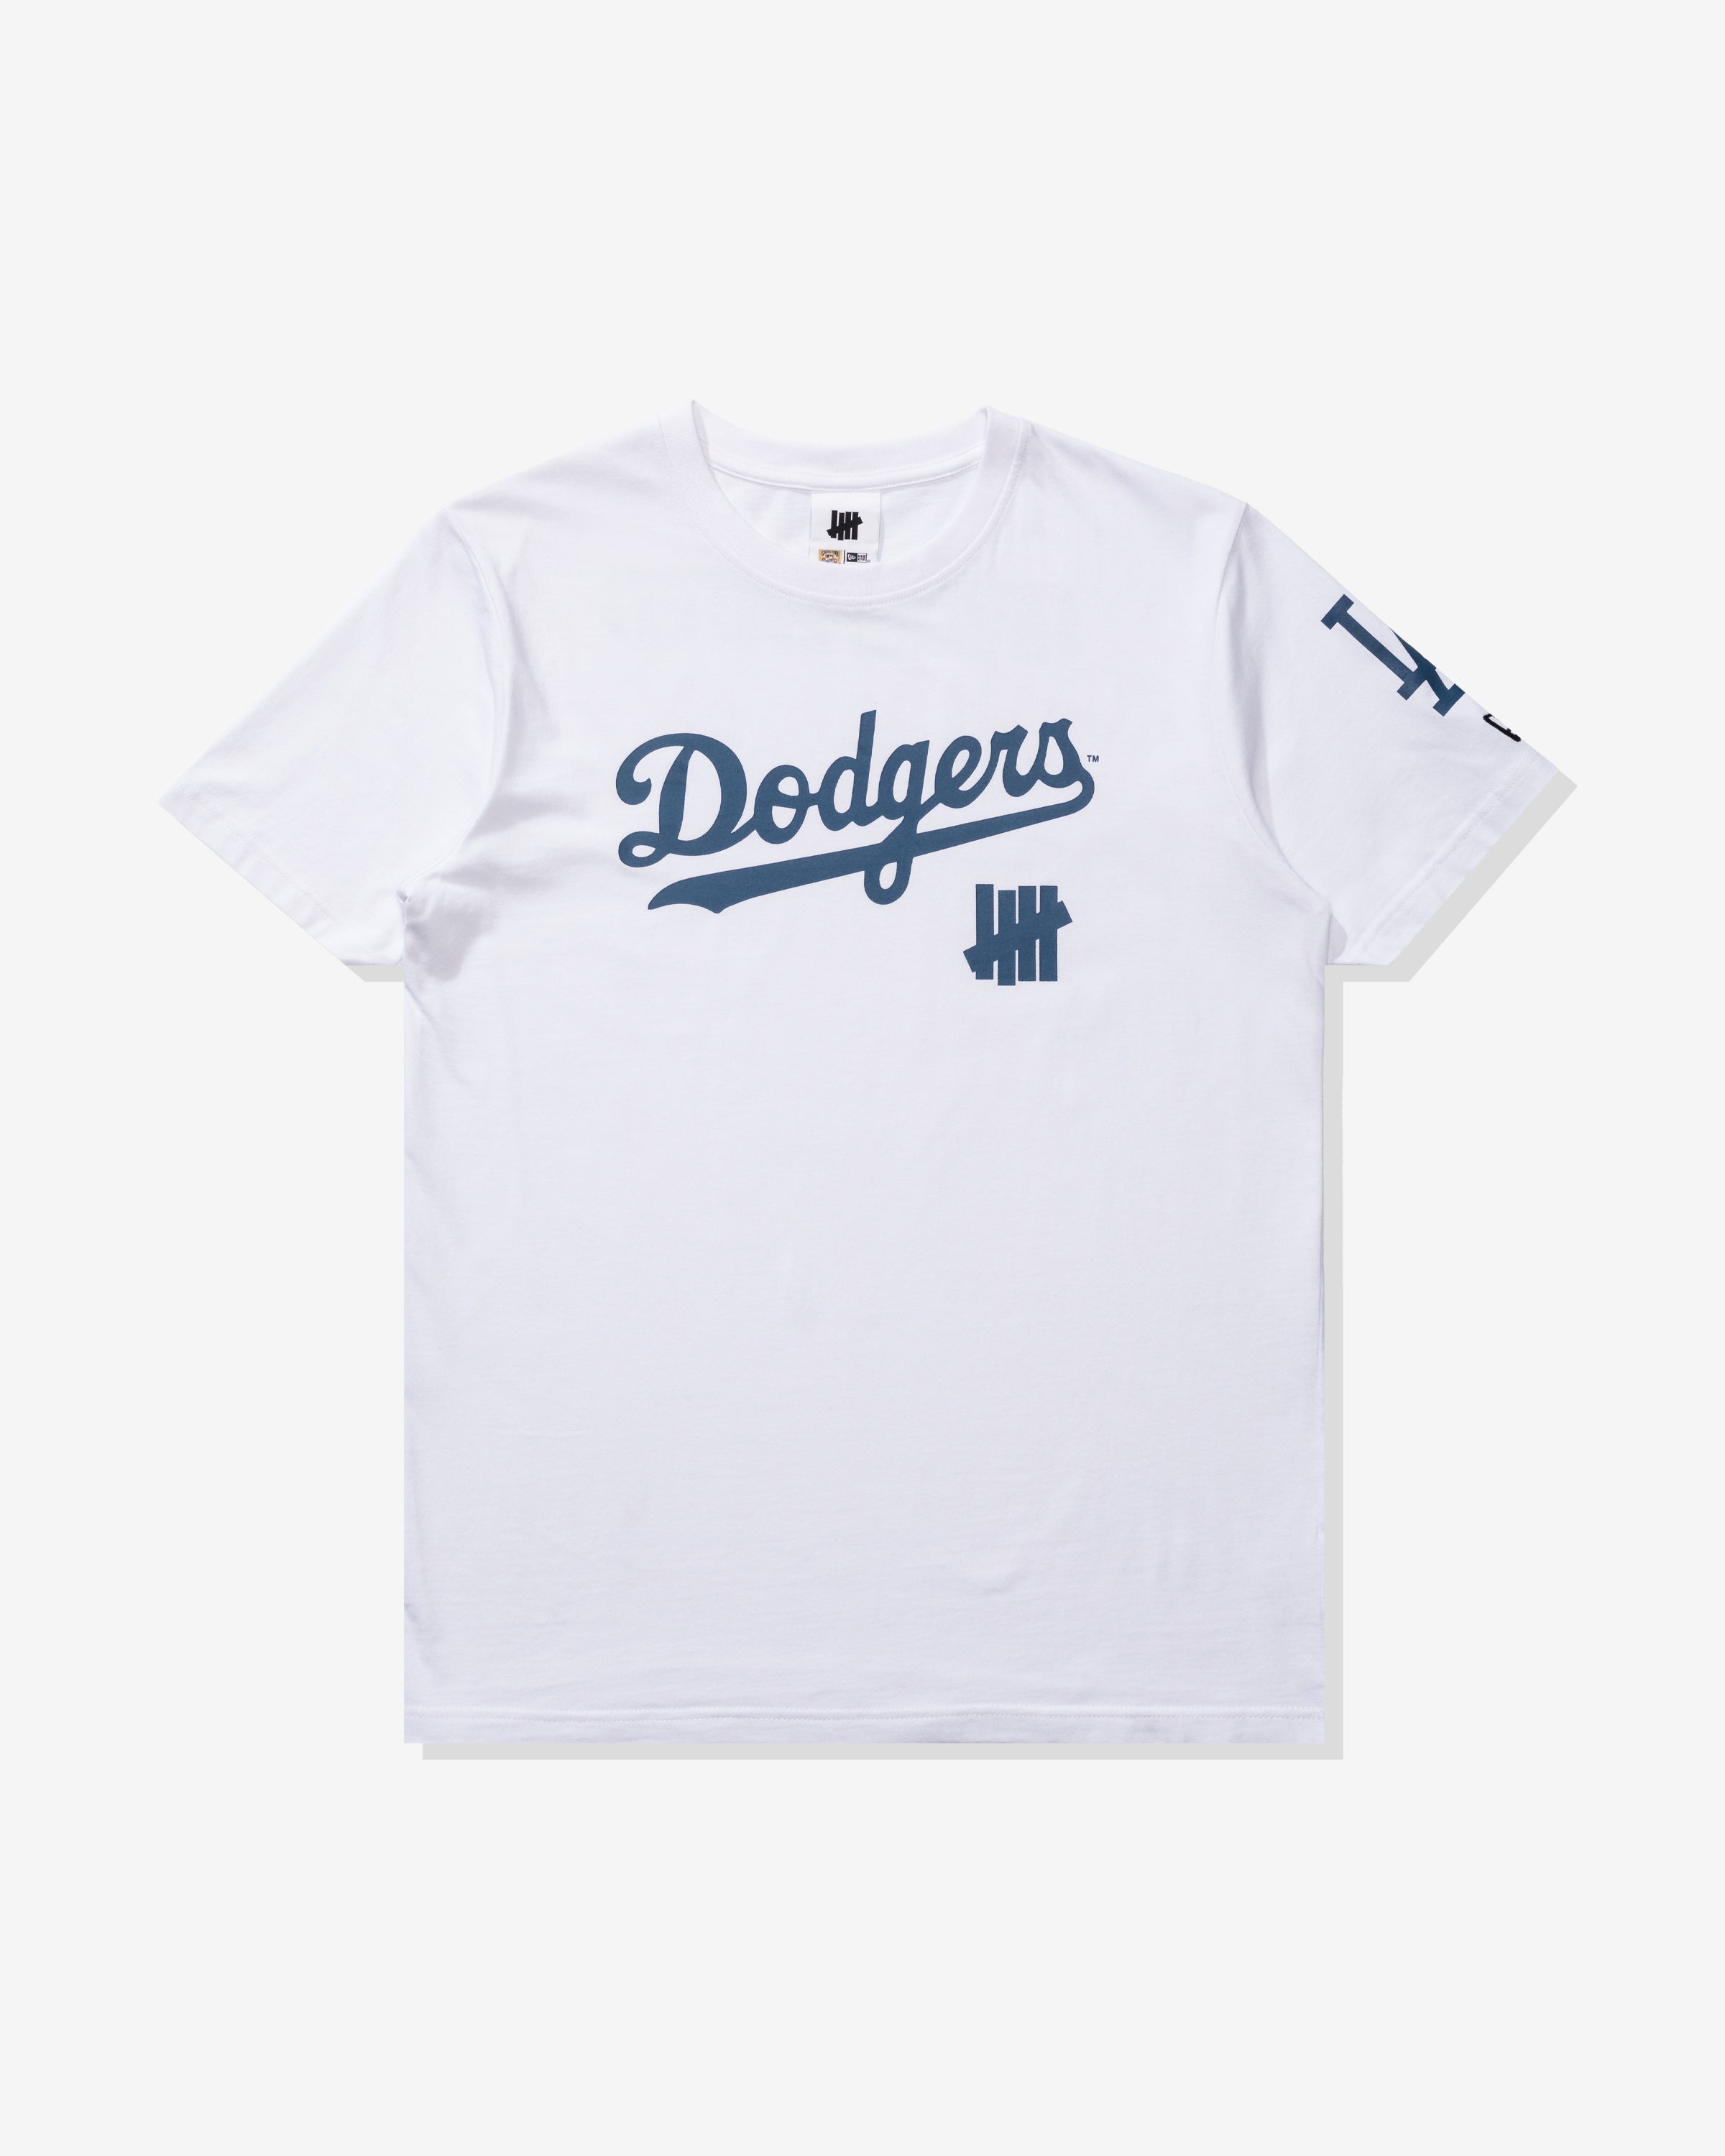 New LA Dodgers World Champions Caricature 88s White Men S-234XL T-Shirt  HA366